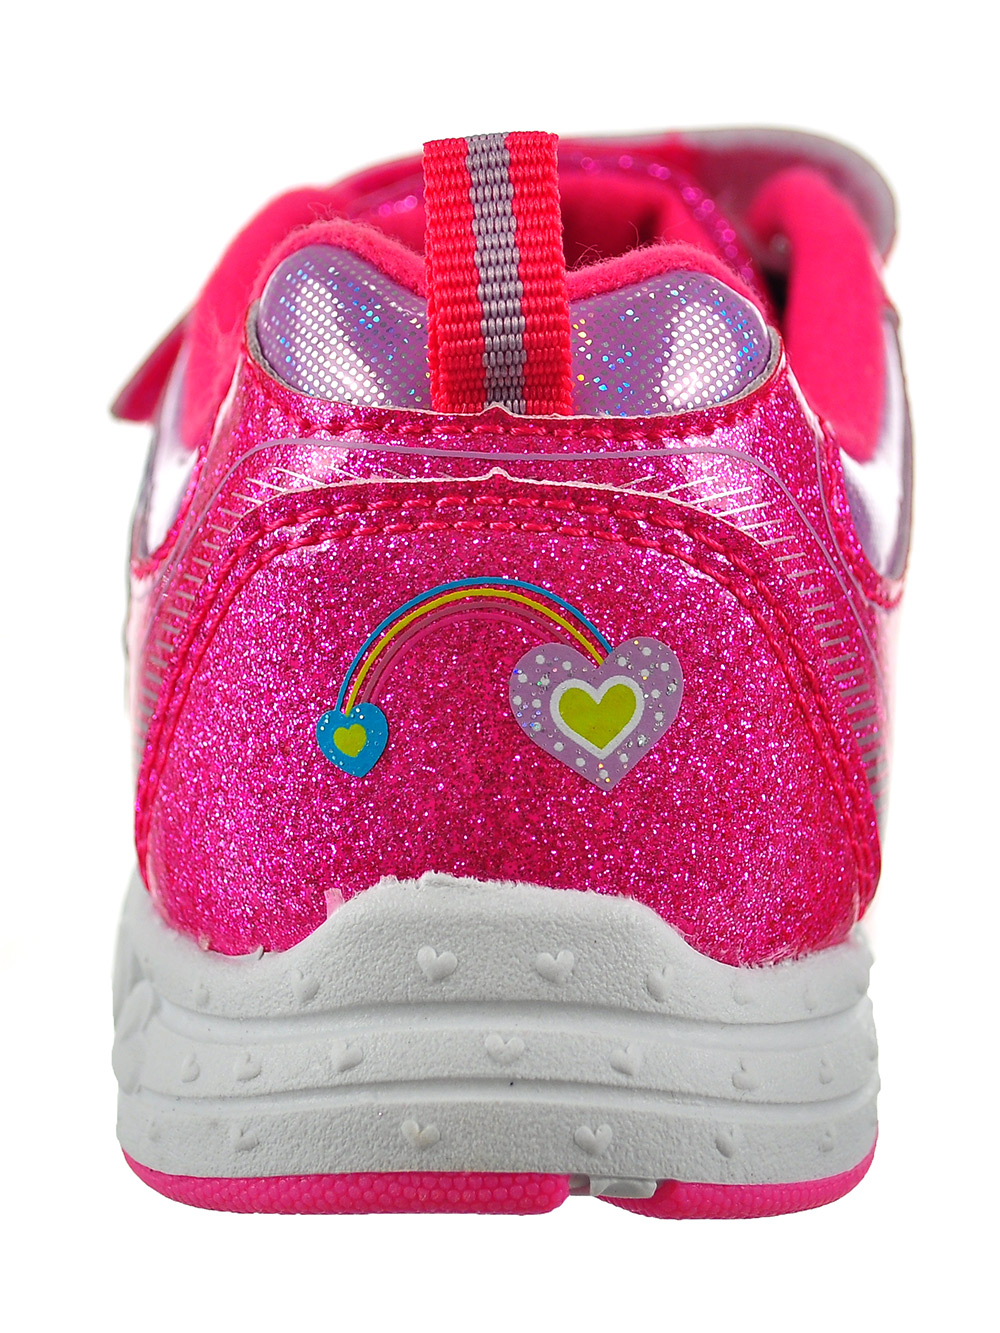 Nickelodeon Paw Patrol Girls' LightUp Glitter Sneakers